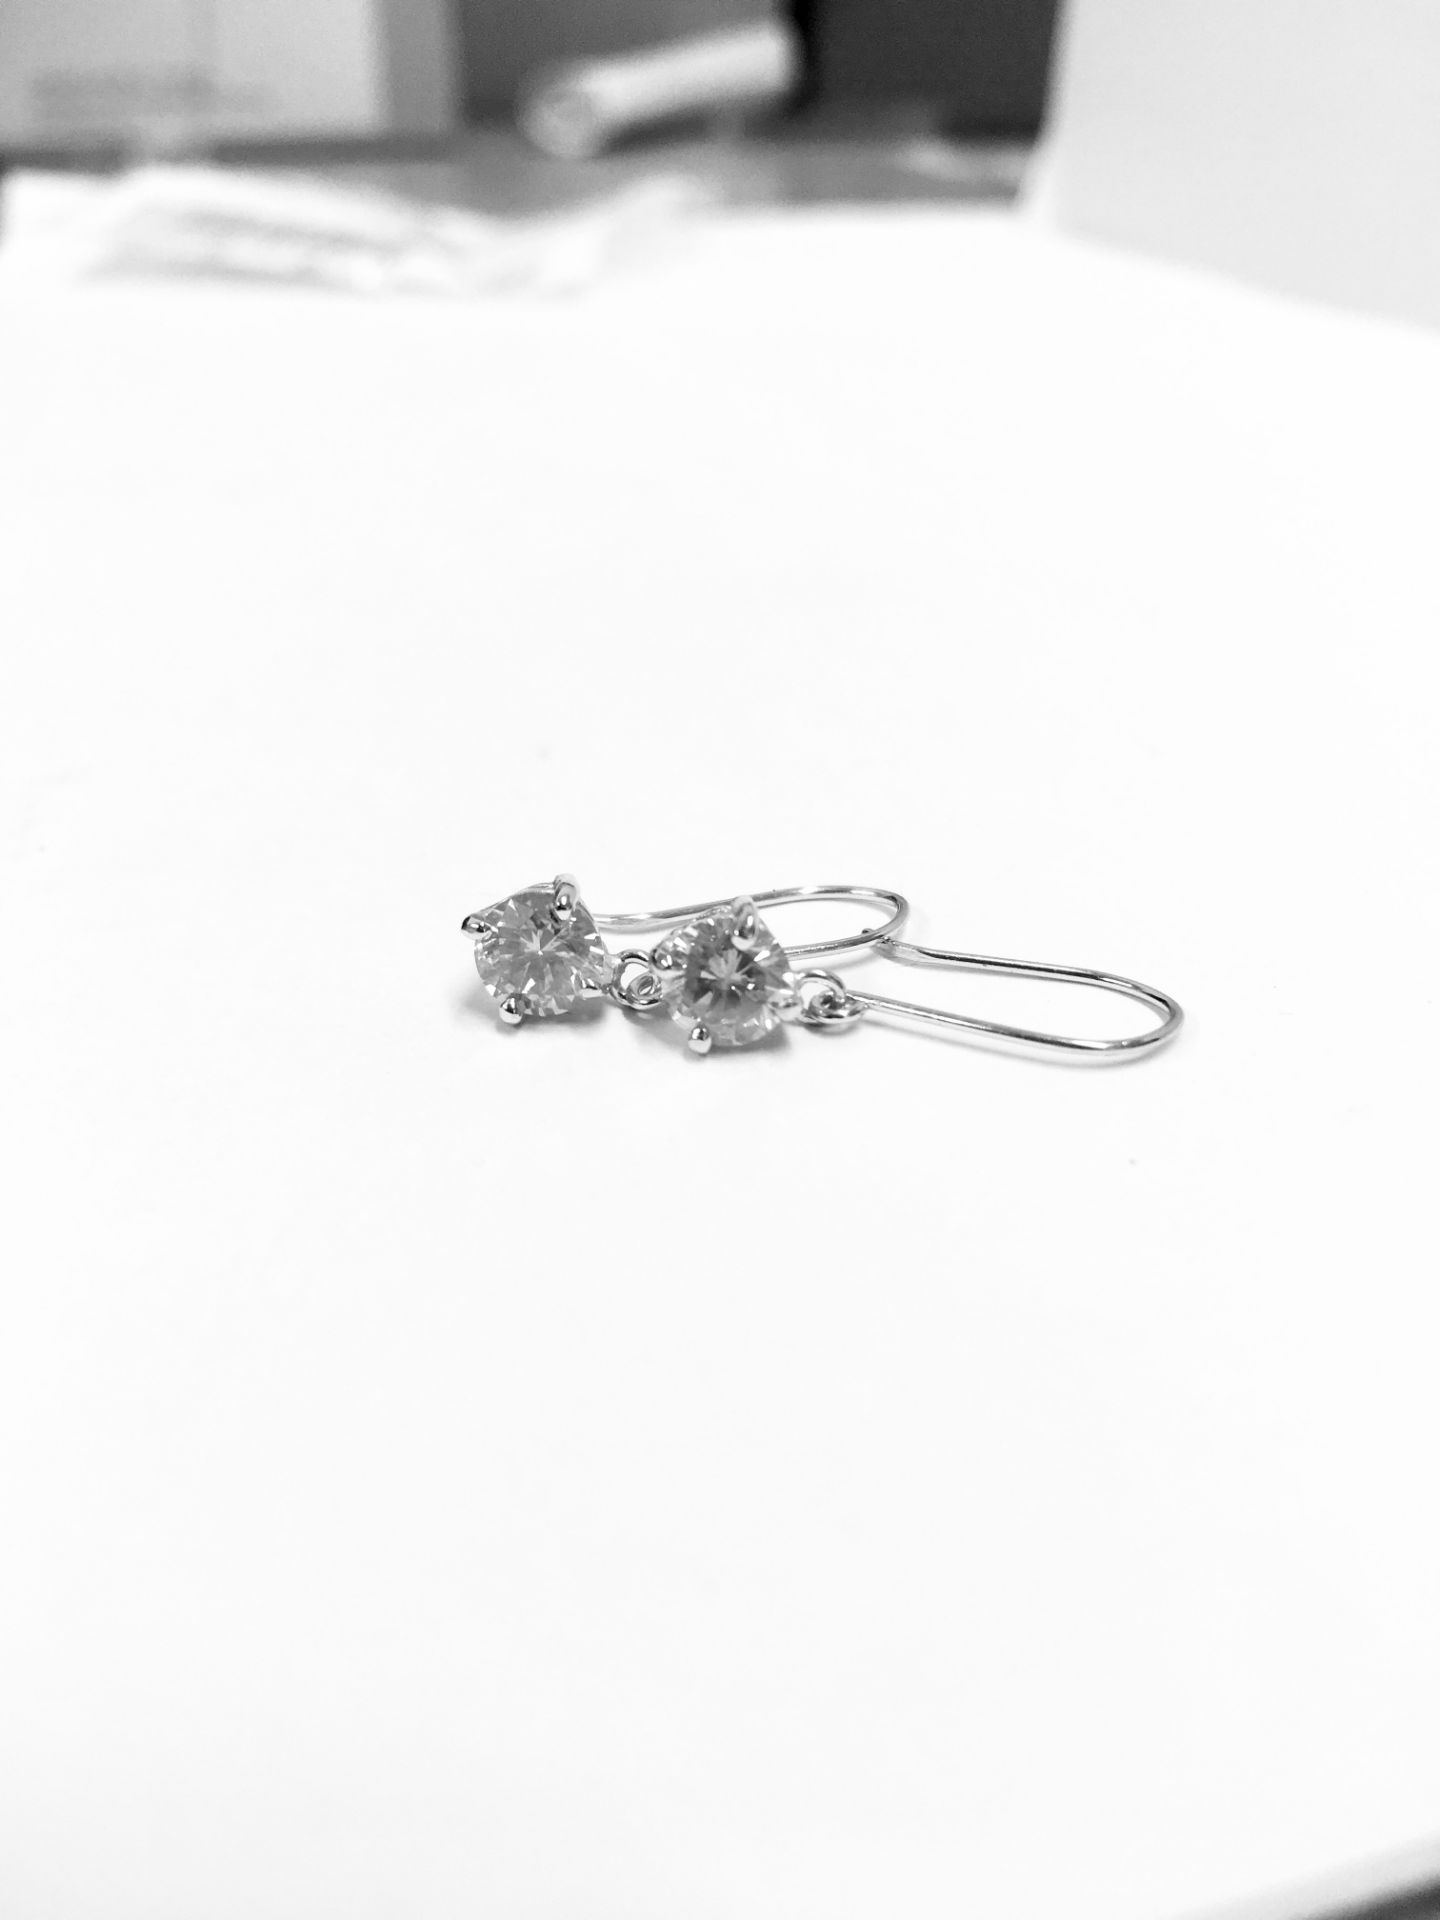 18ct diamond drop earrings 1.00ct total h colour vs enhanced .2gms 18ct 2 gms uk made appraisal - Image 2 of 5